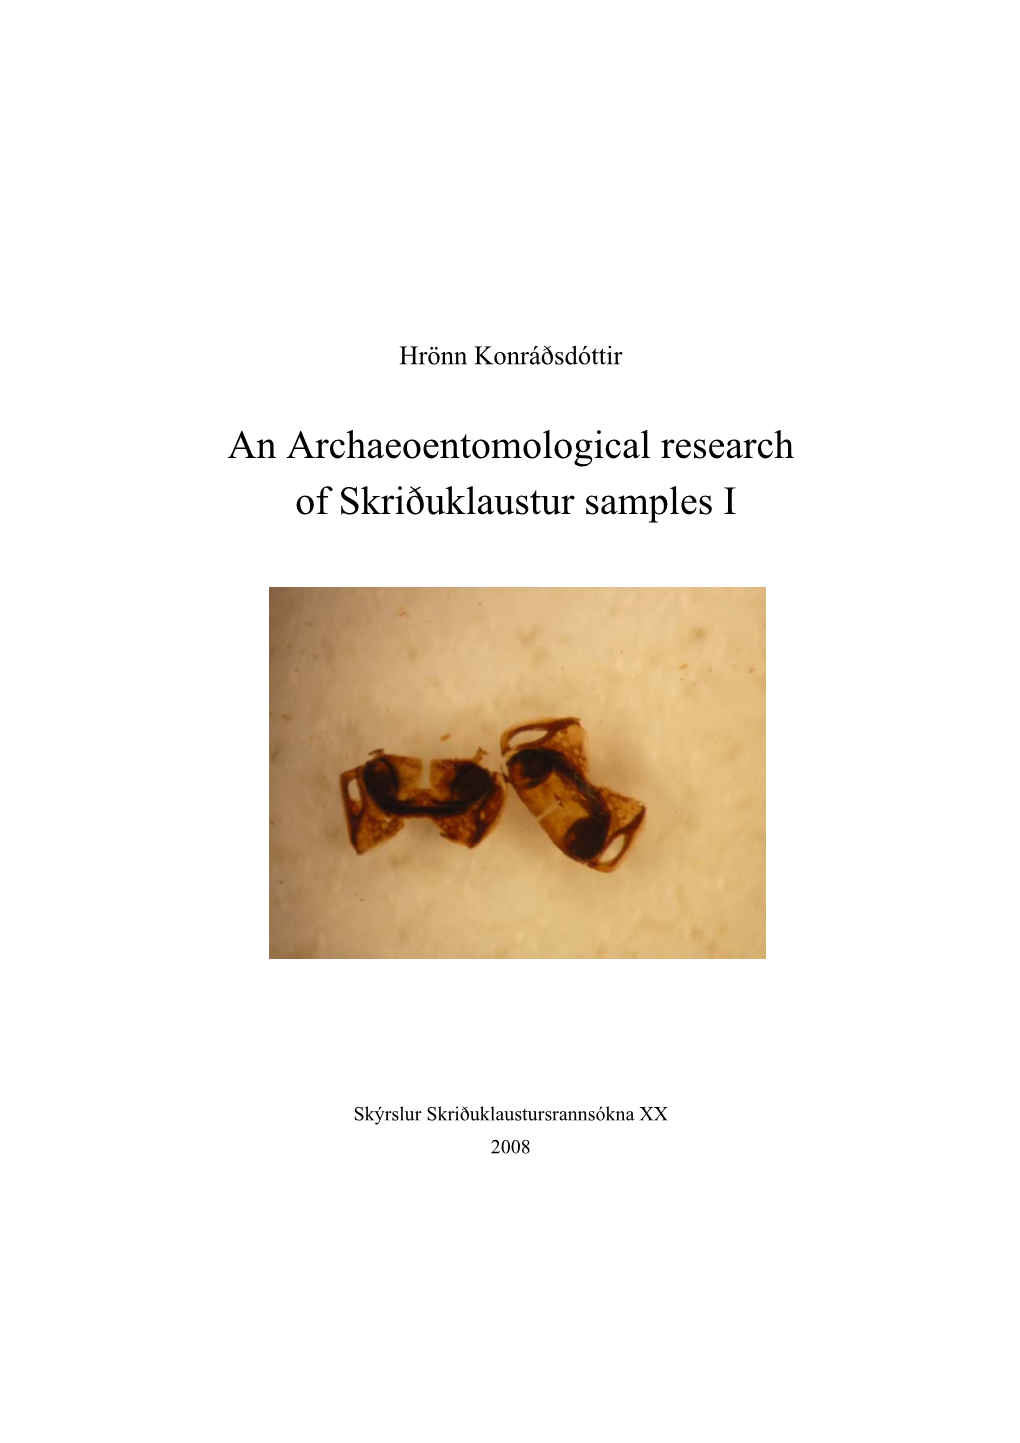 An Archaeoentomological Research of Skriðuklaustur Samples I